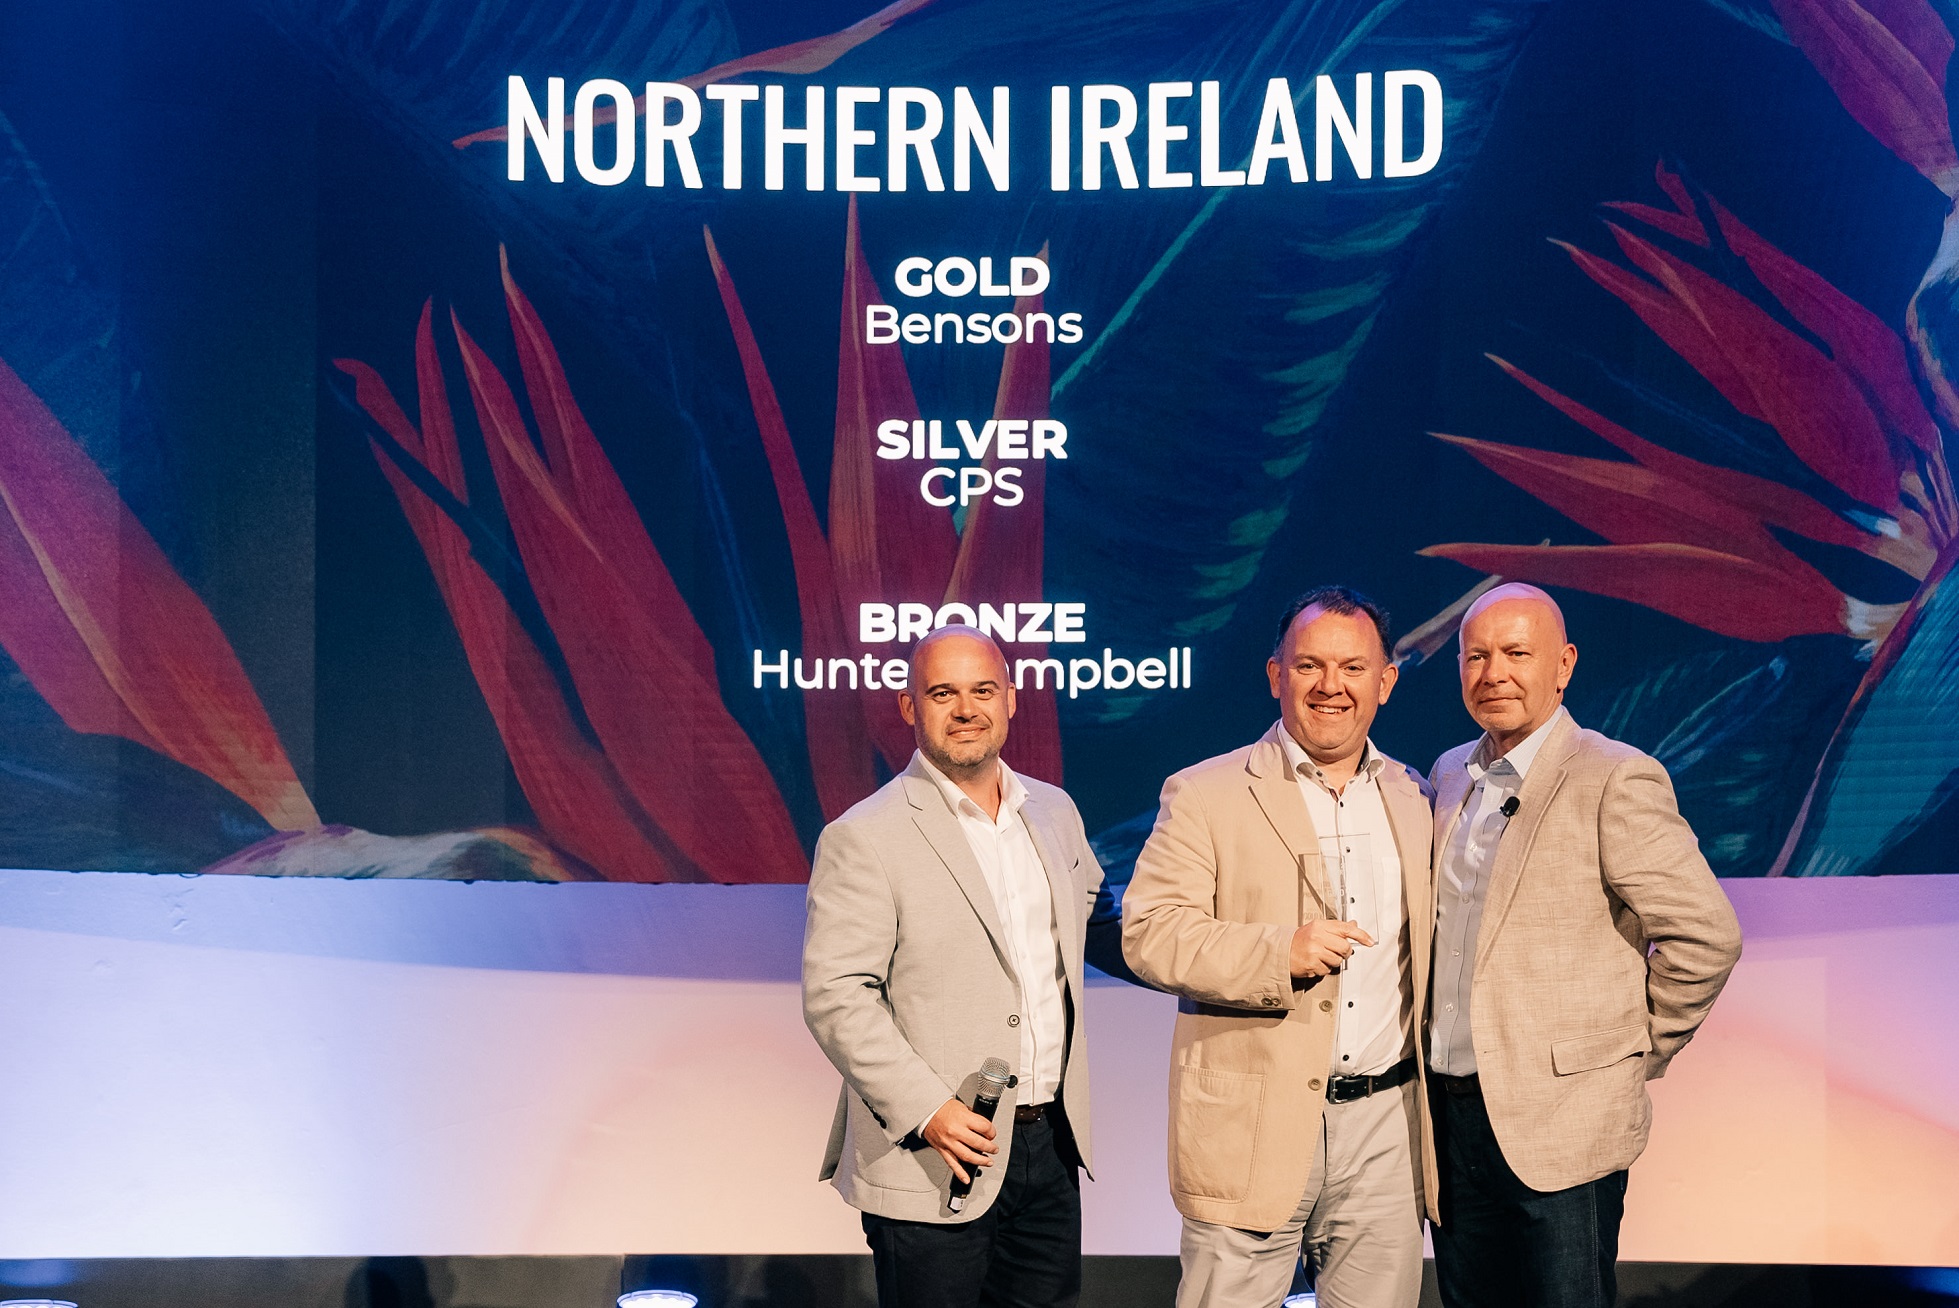 Northern Ireland Gold winners